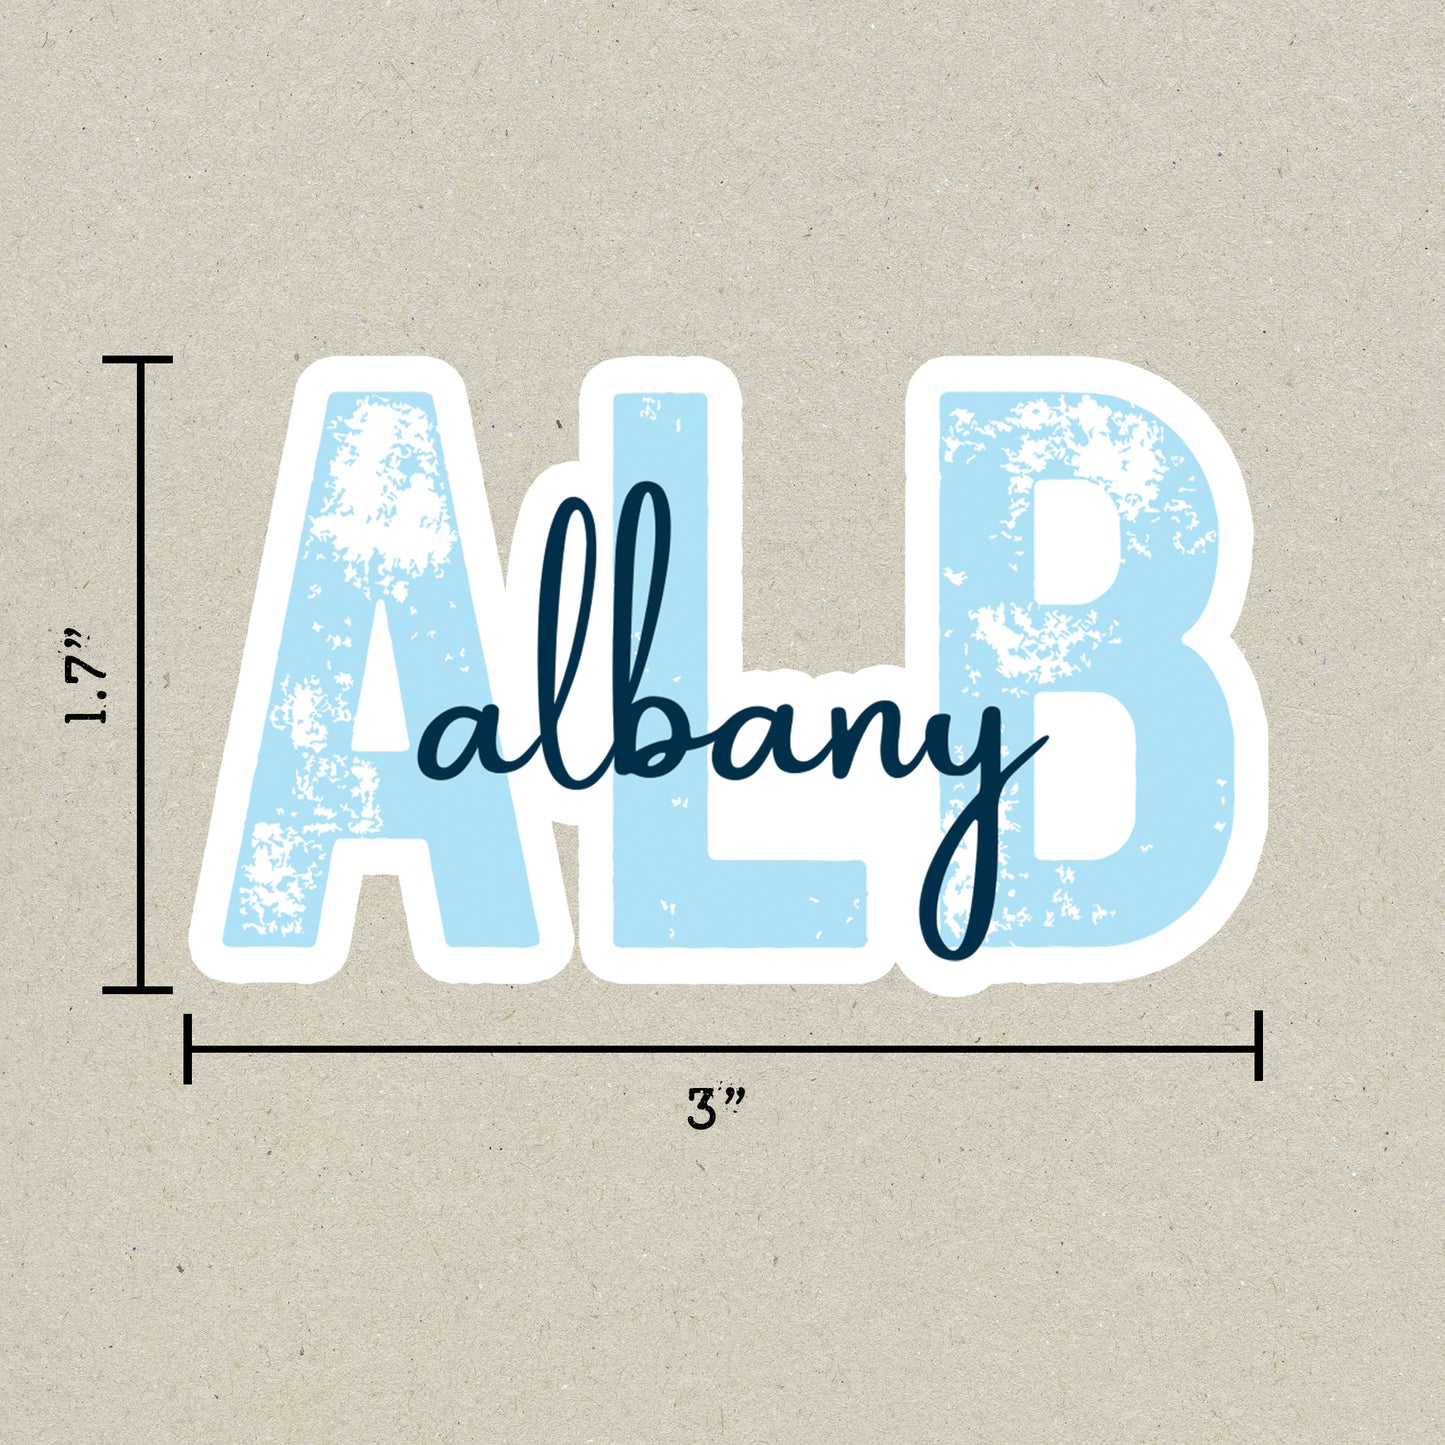 ALB Albany Airport Code Sticker